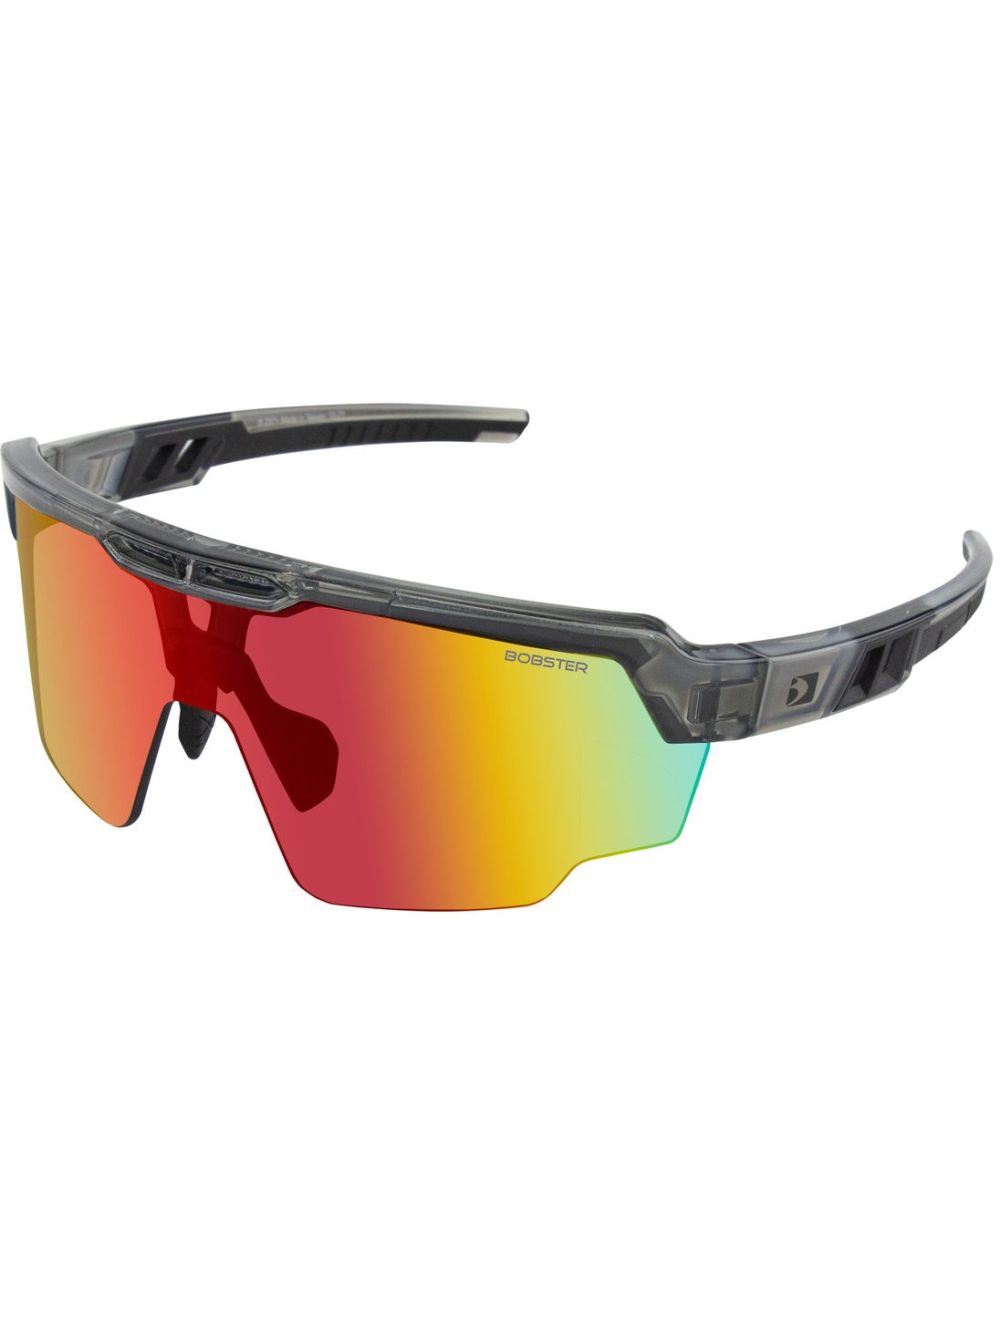 Wheelie Sunglasses - Gloss Clear/Gray Frame w/ Smoked Black Red Revo Lens